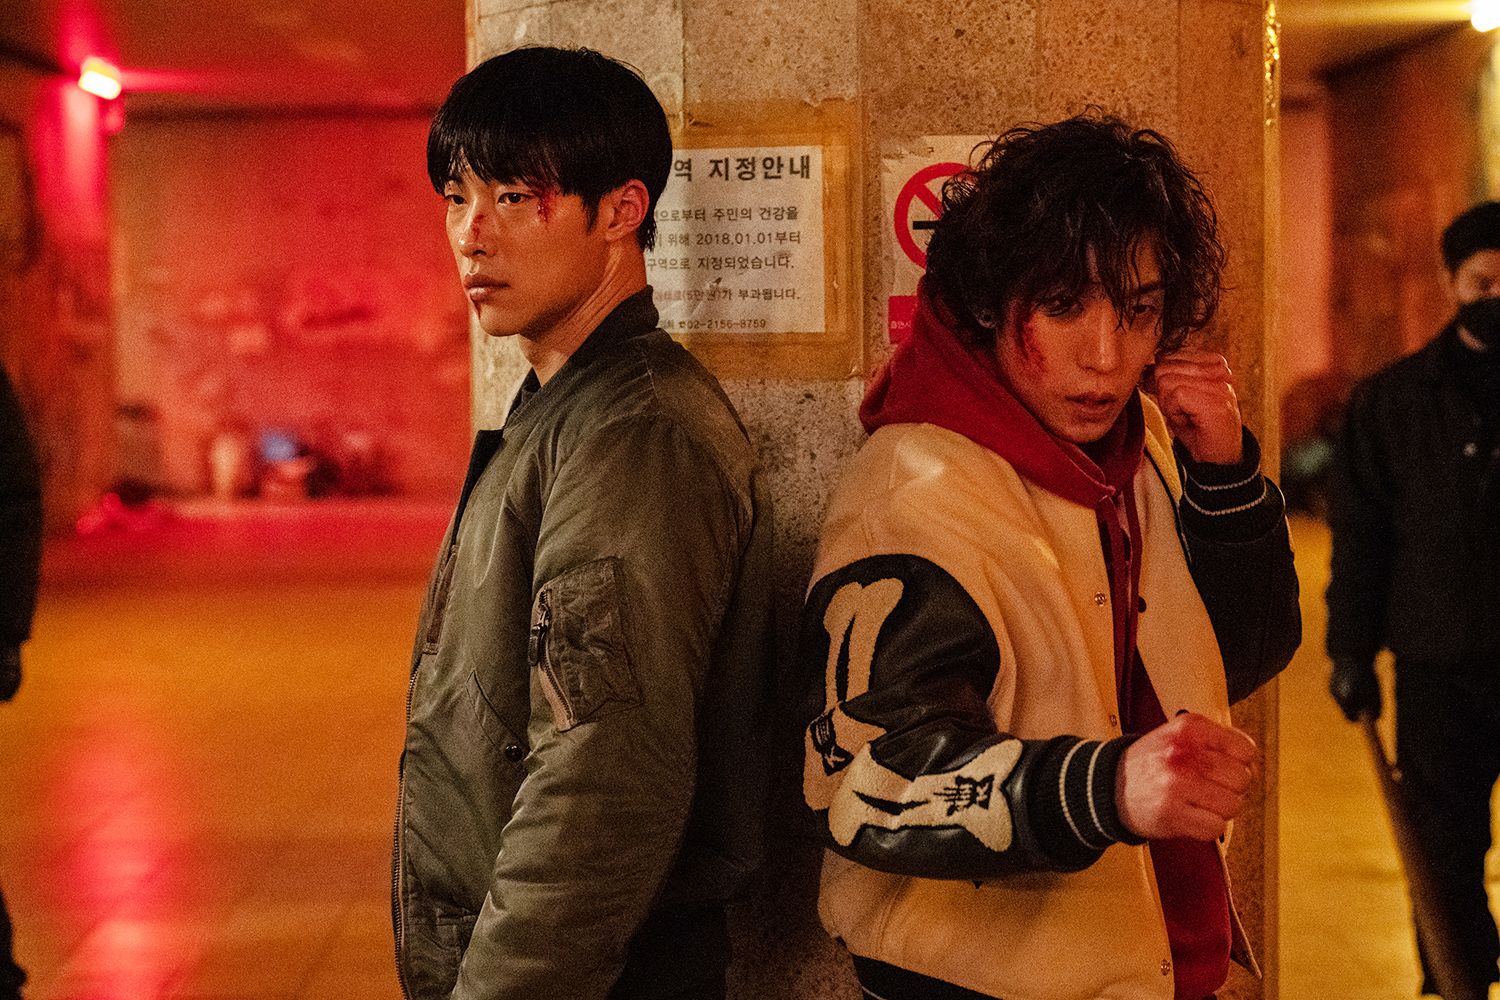 Series coreanas en Netflix para aprender coreano - MosaLingua